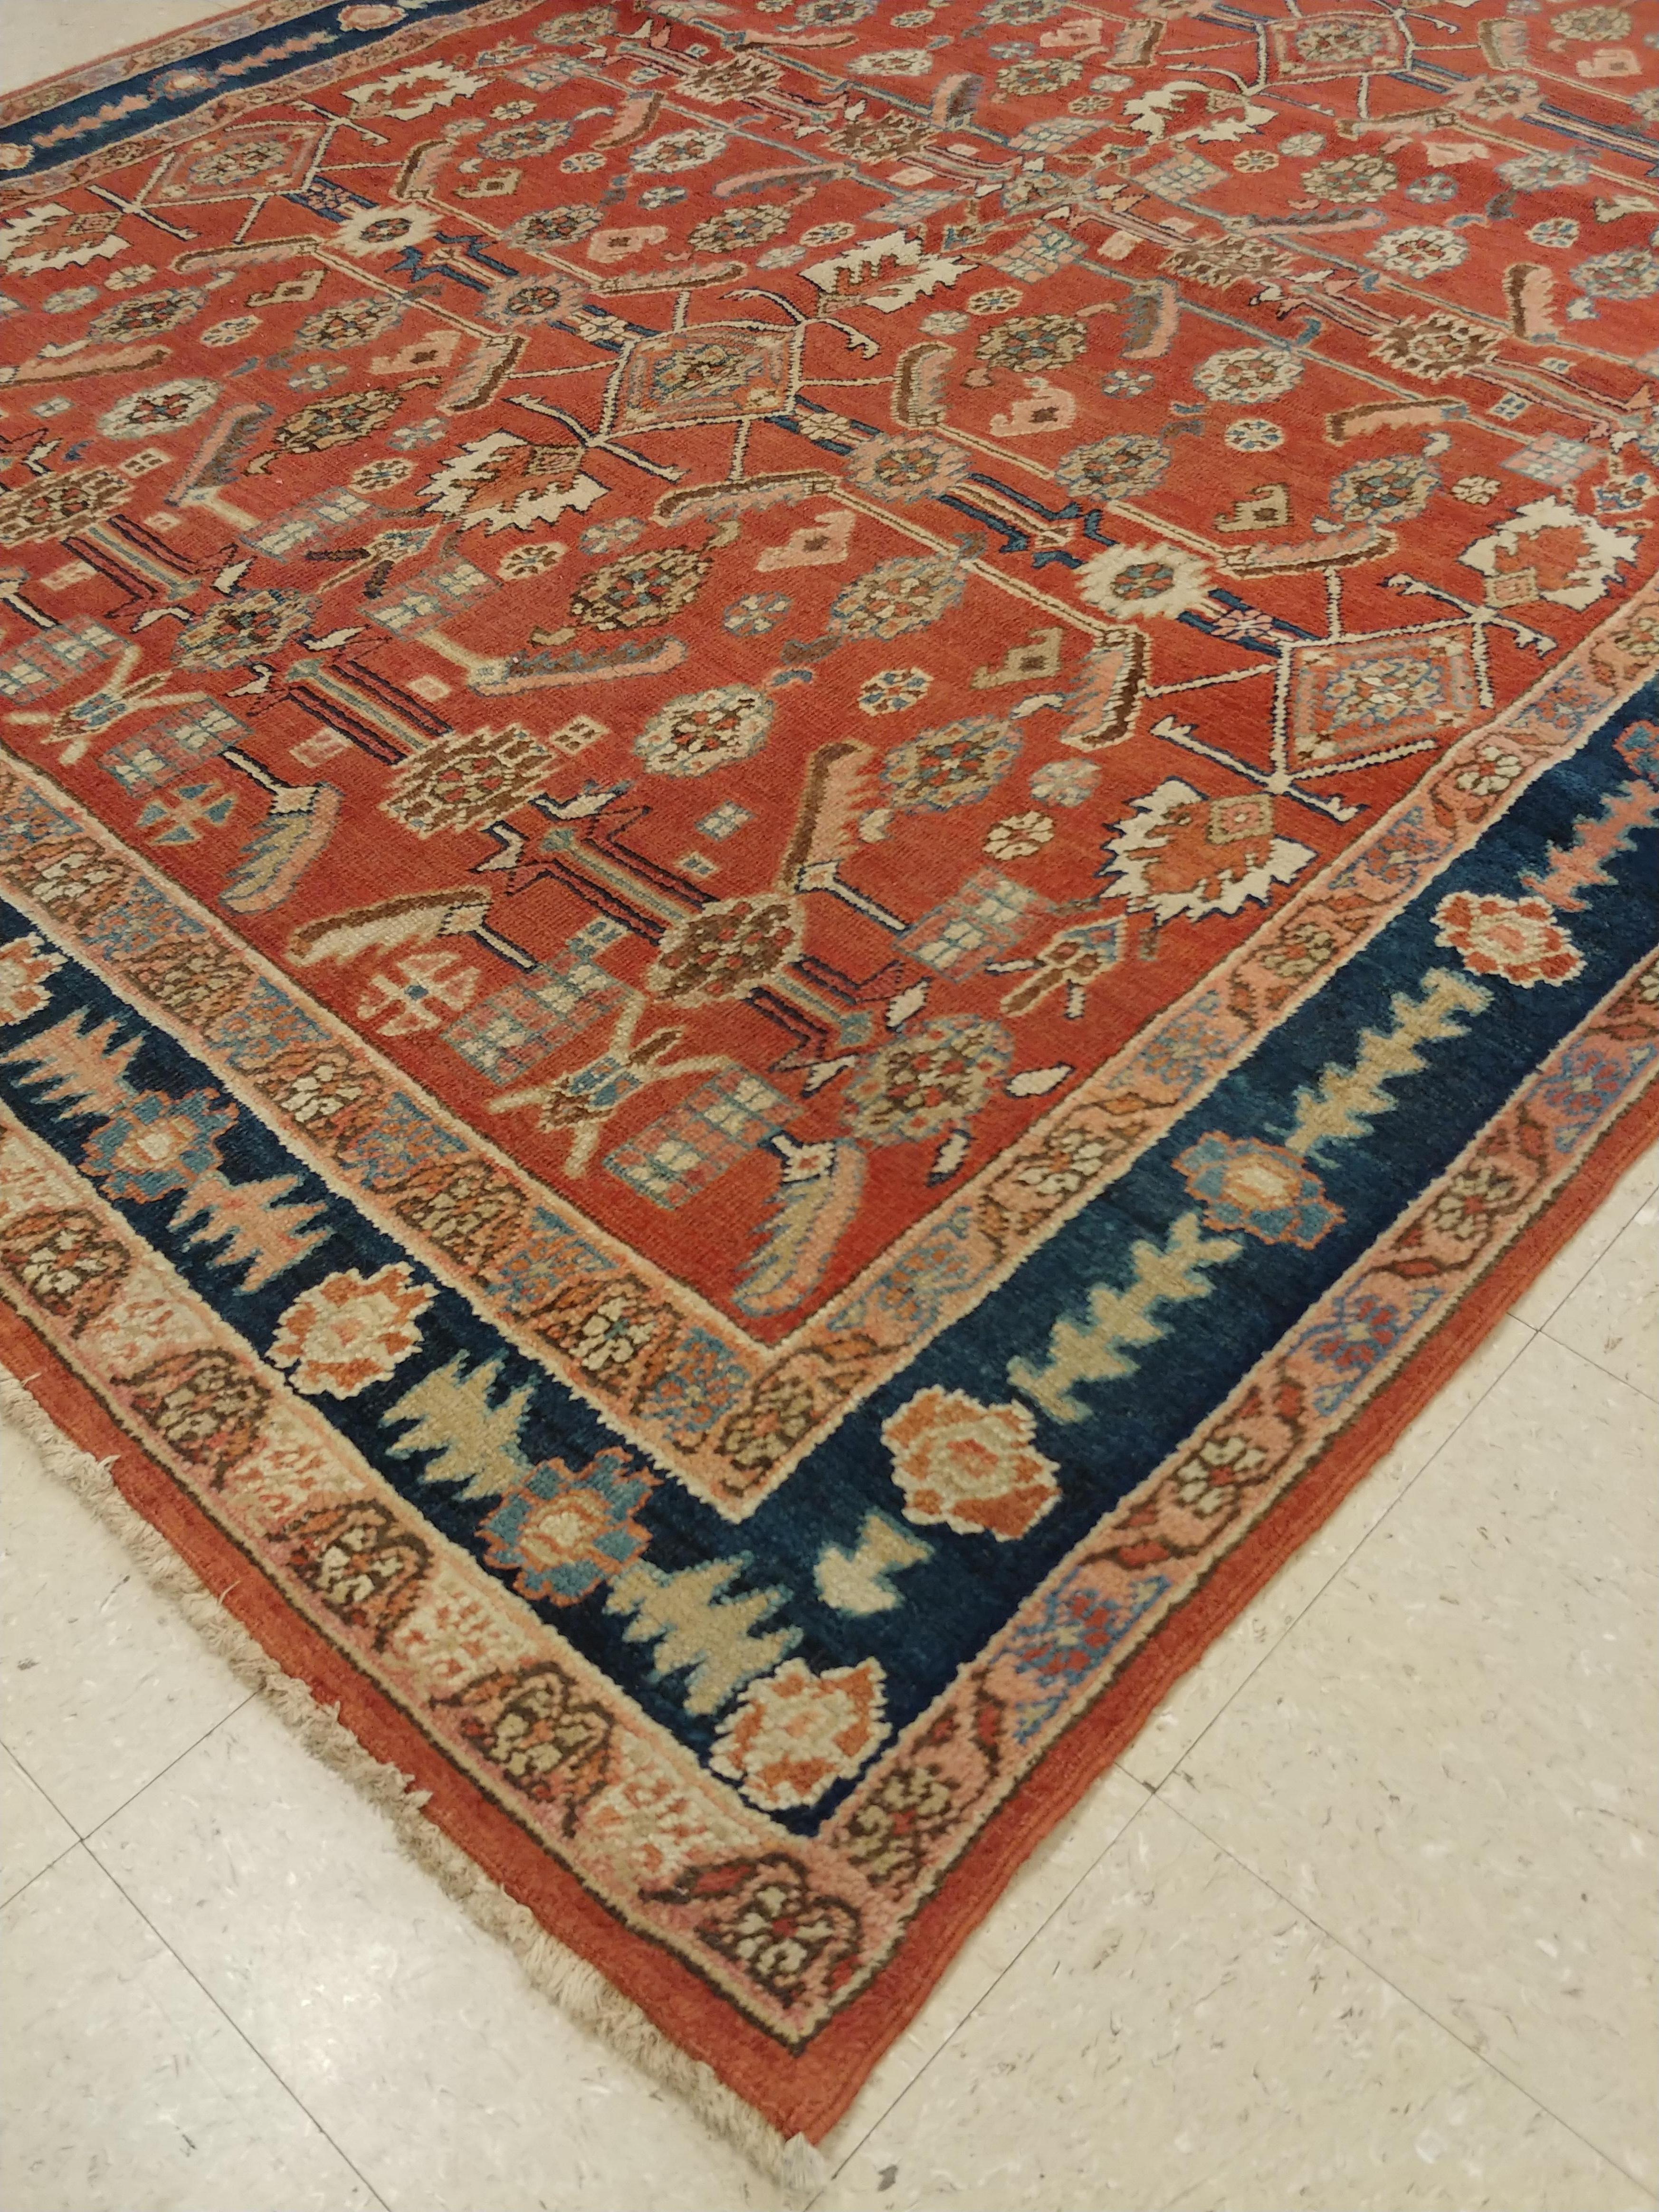 19th Century Antique Persian Serapi Carpet, Handmade Oriental Rug, Rust-Ivory Blue